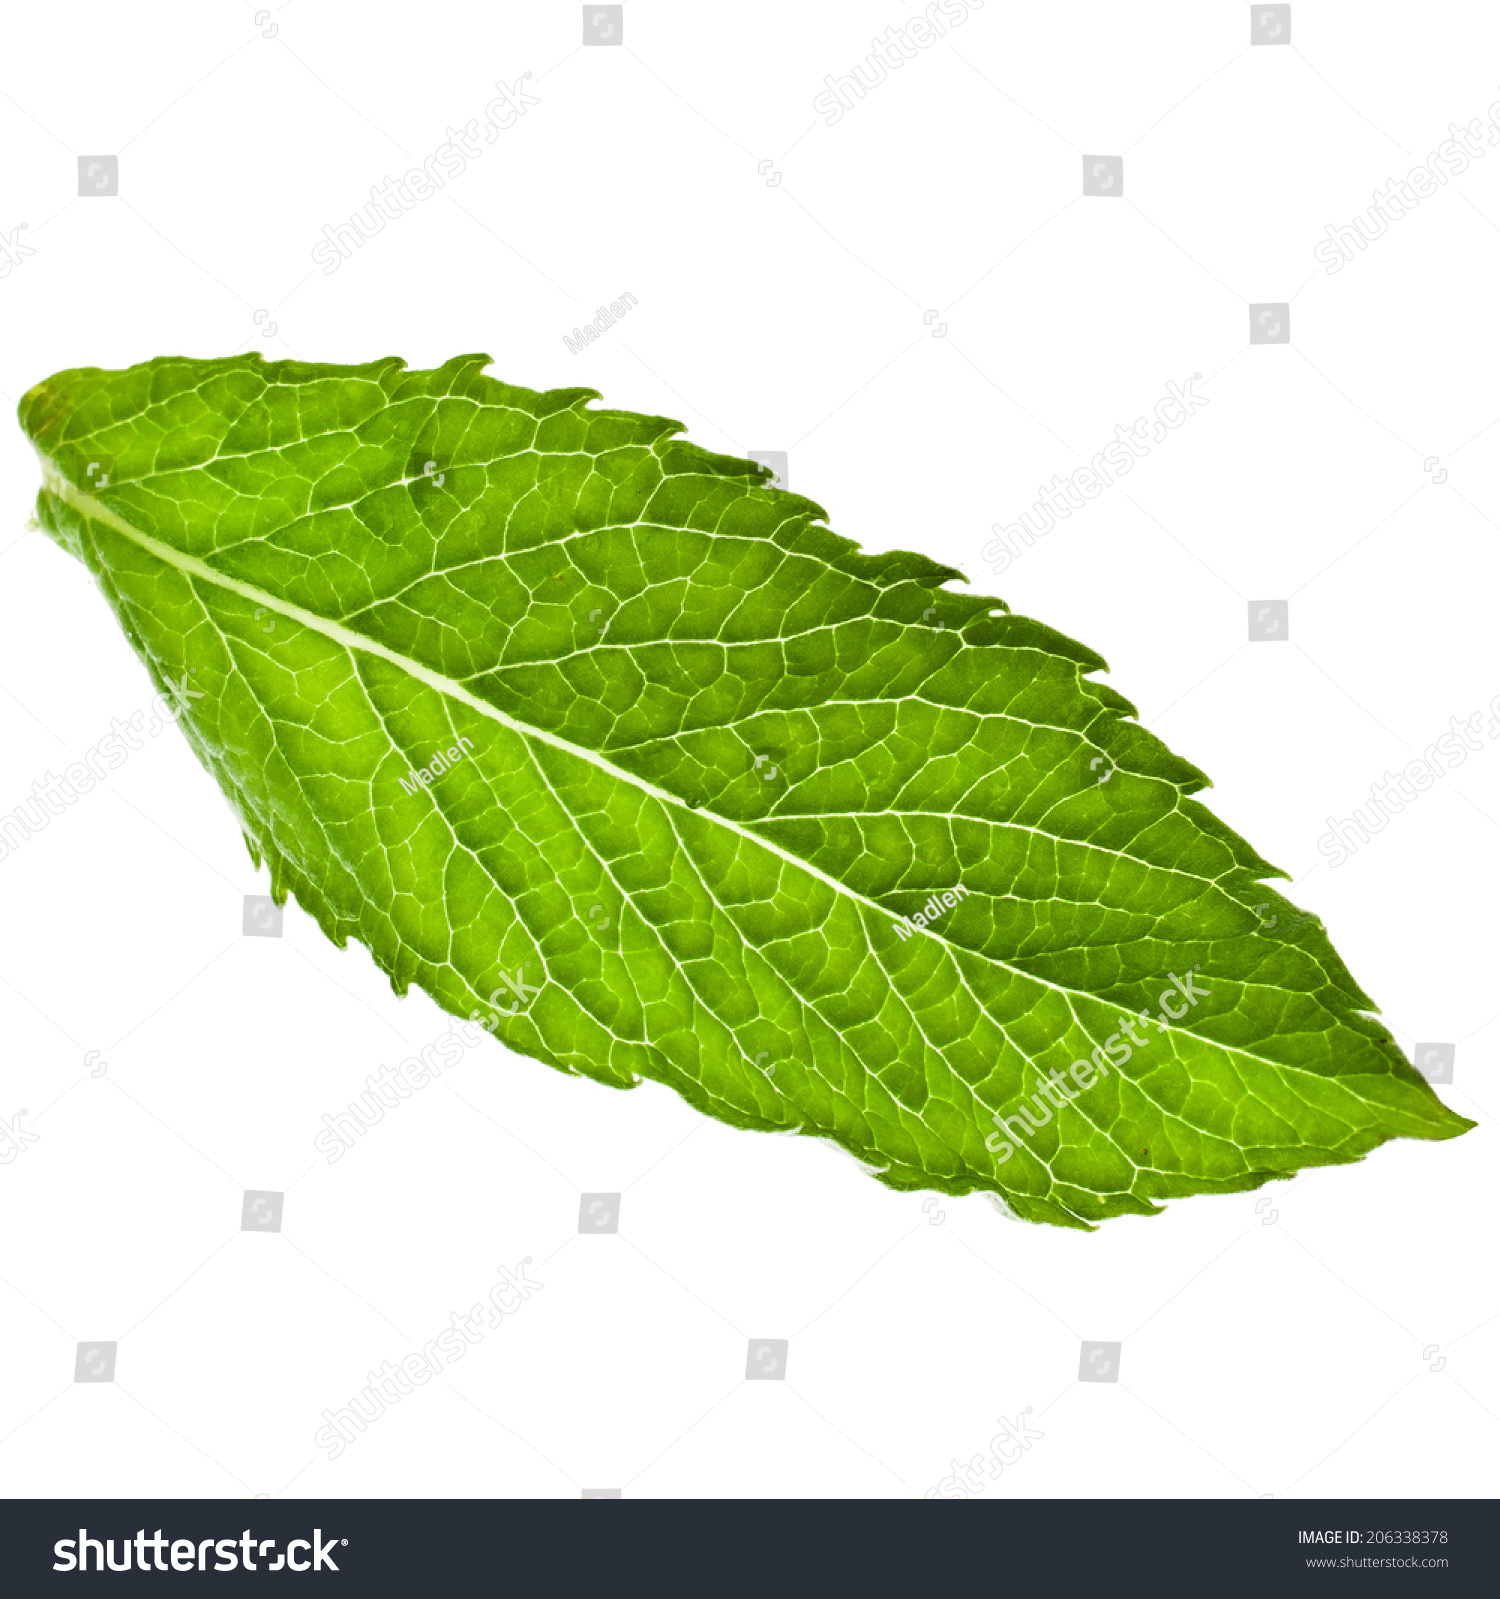 One Single Green Fresh Leaves Mint Stock Photo 206338378 - Shutterstock